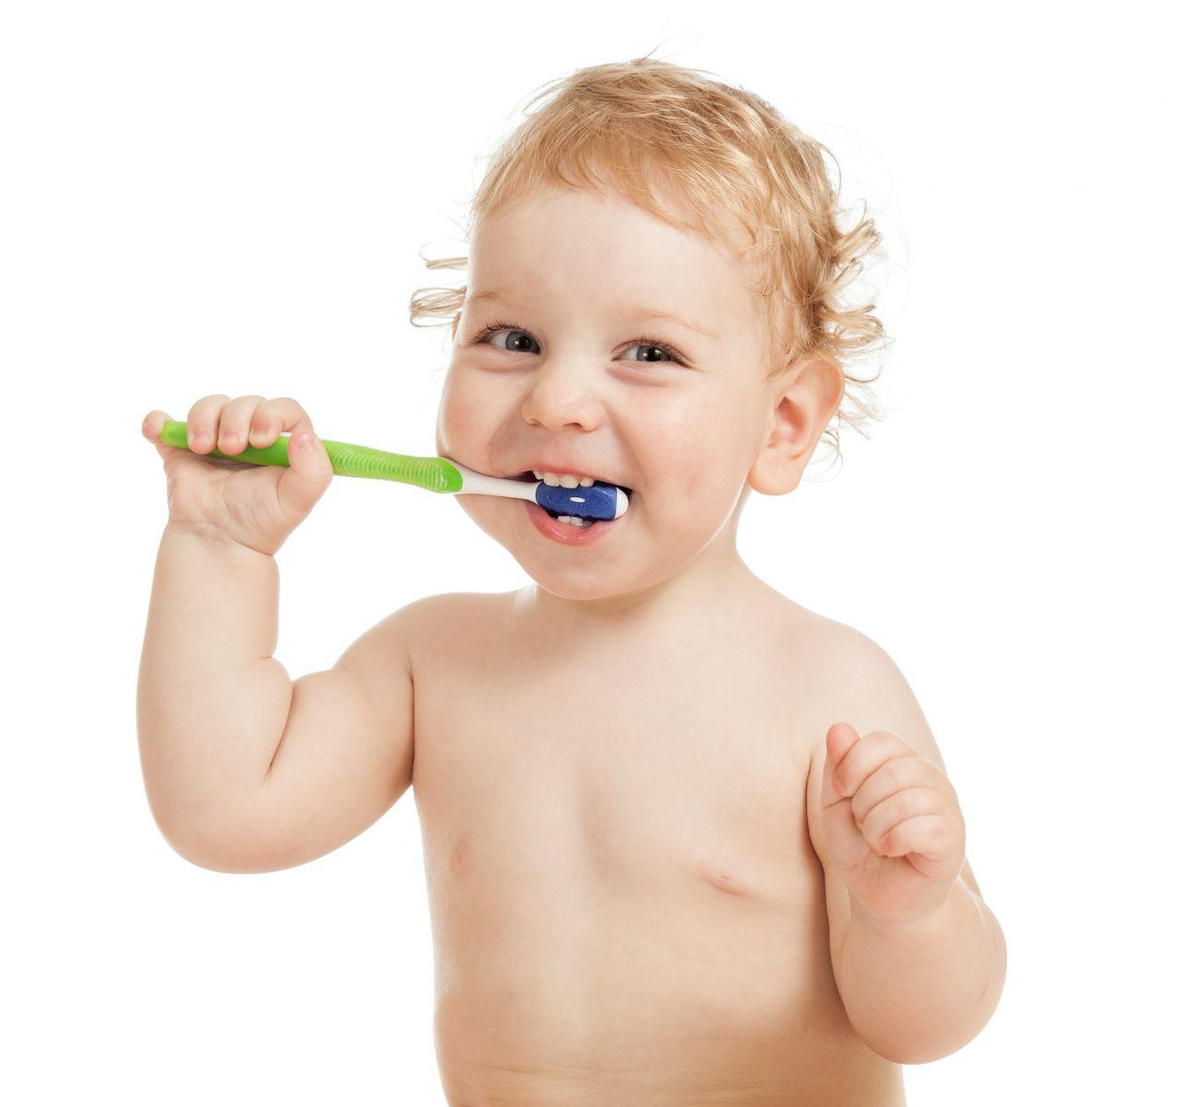 child's first dental visit